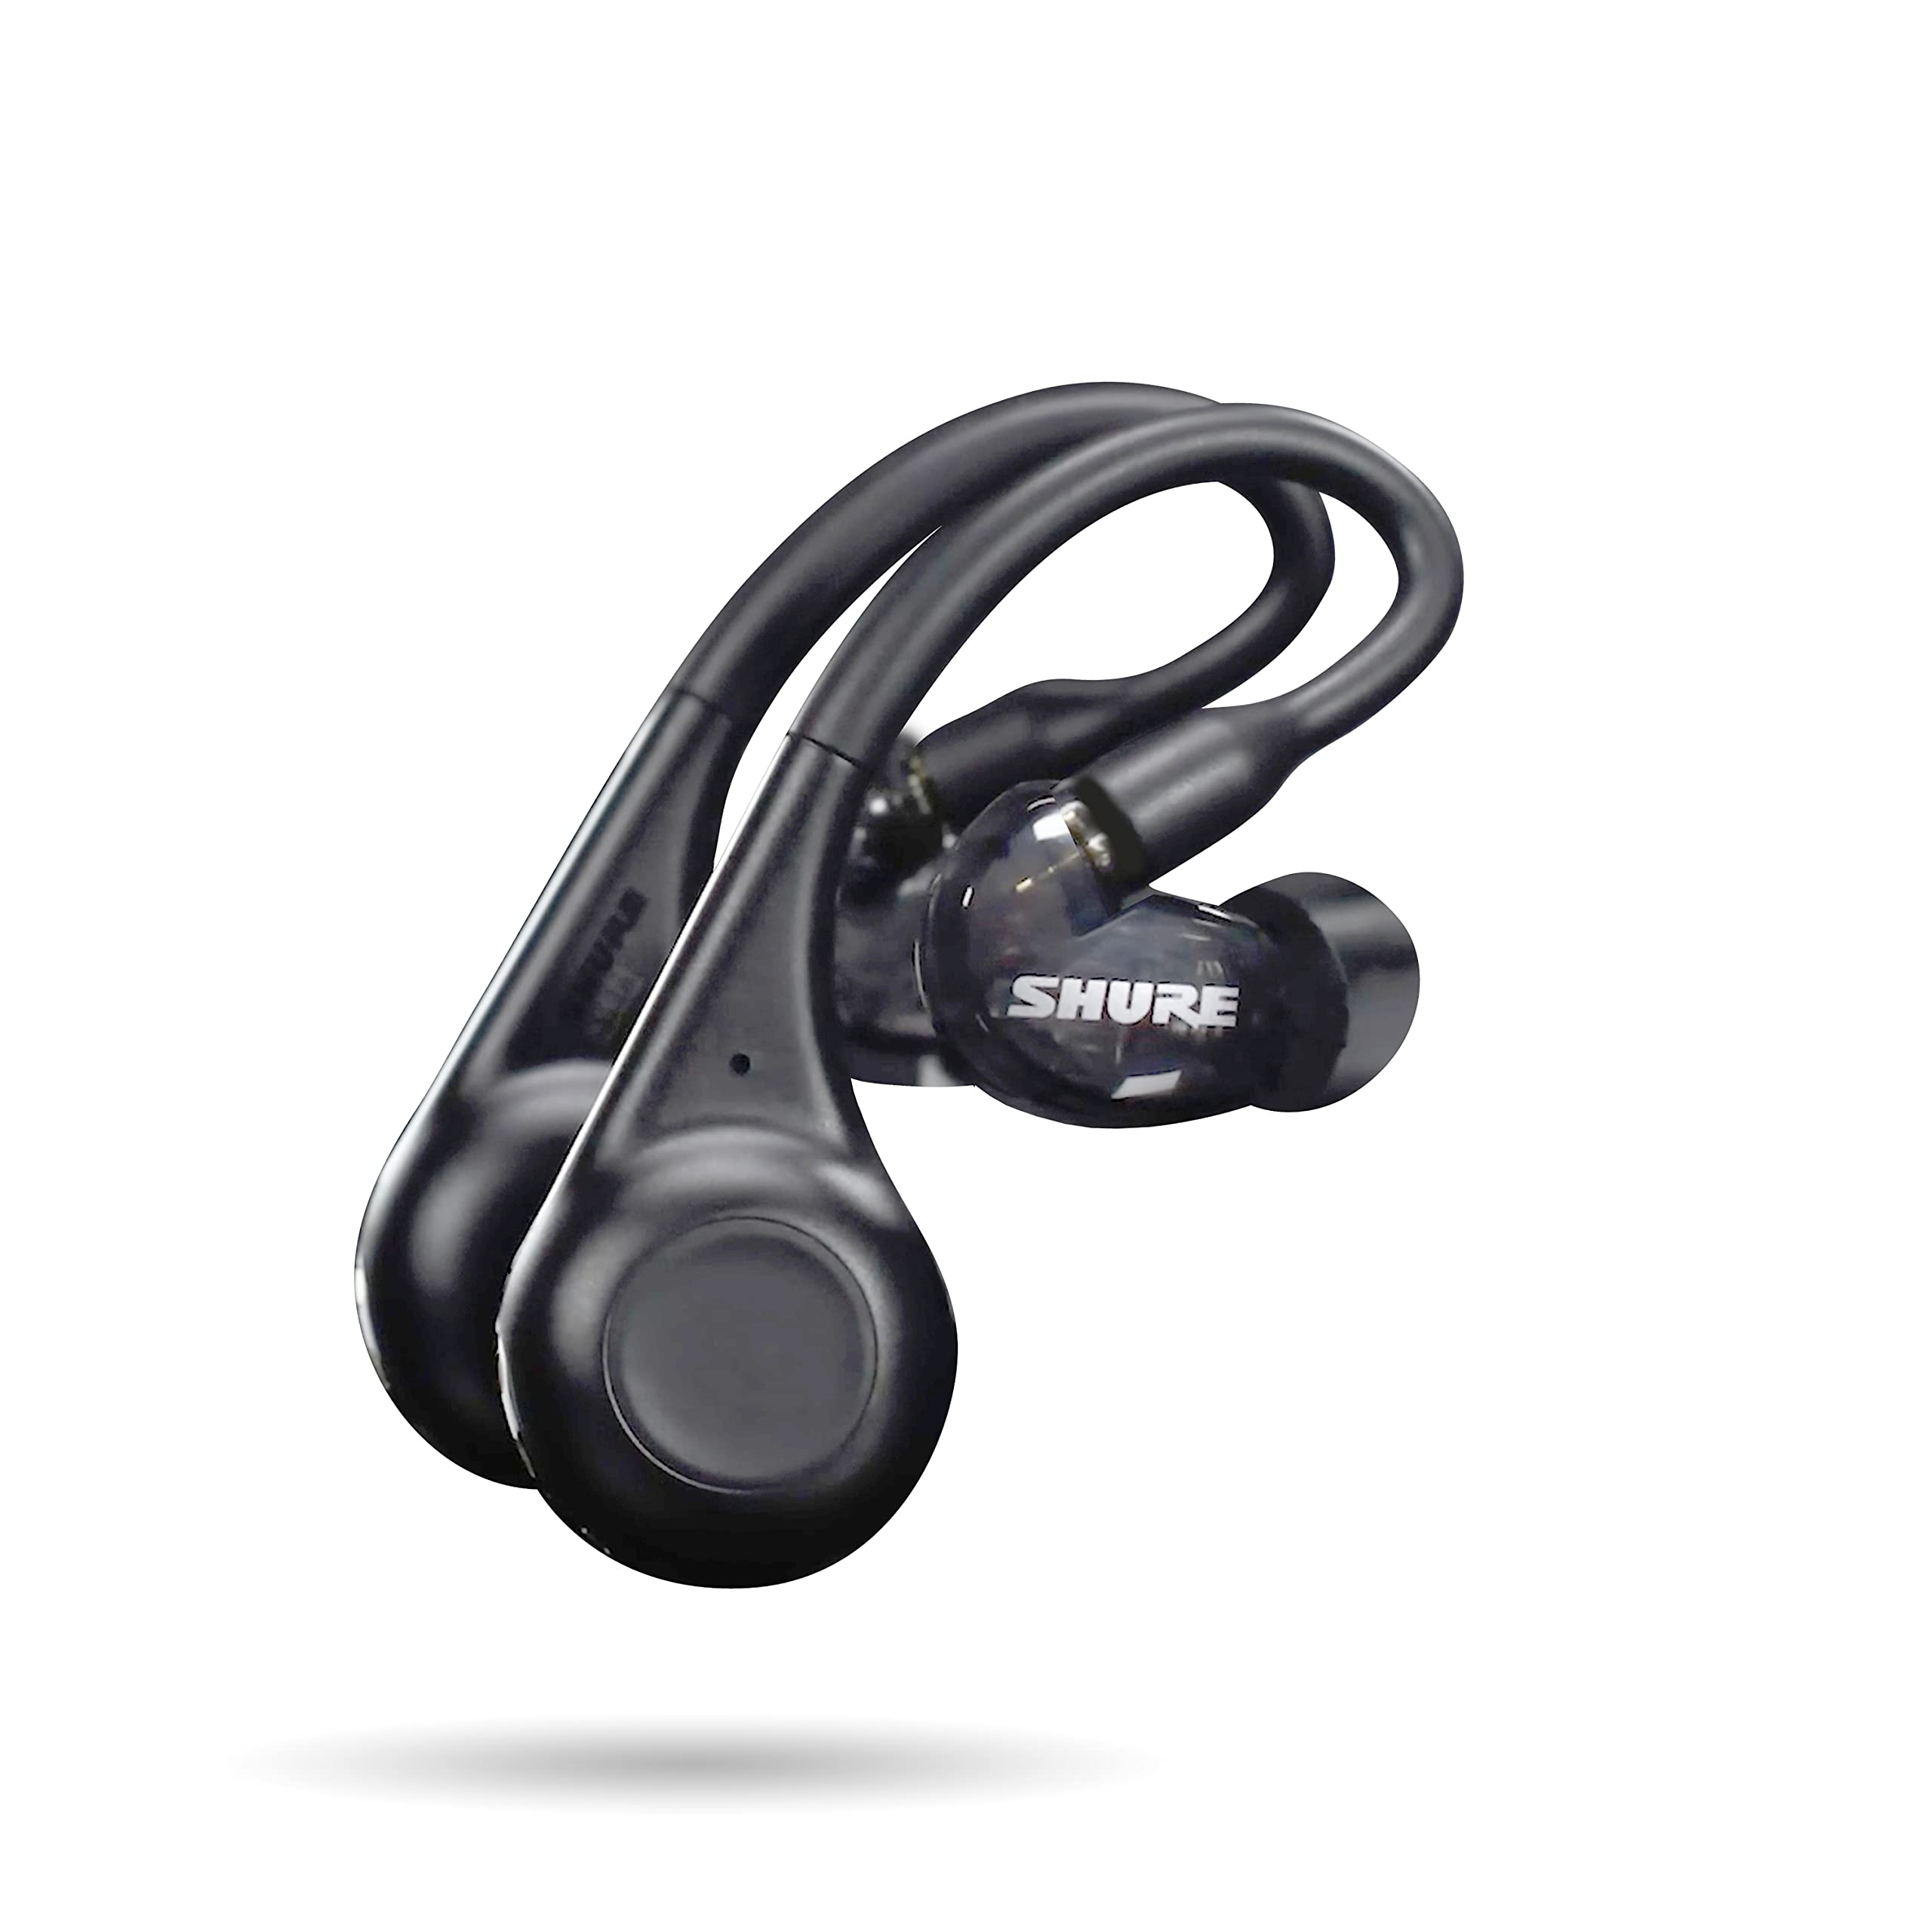 Shure AONIC 215 TW2 真正无线隔音耳塞，采用蓝牙 5 技术，优质音频，深沉低音，牢固贴合耳罩式，电池续航时间 32 小时，指尖控制 -（第 2 代） - 黑色